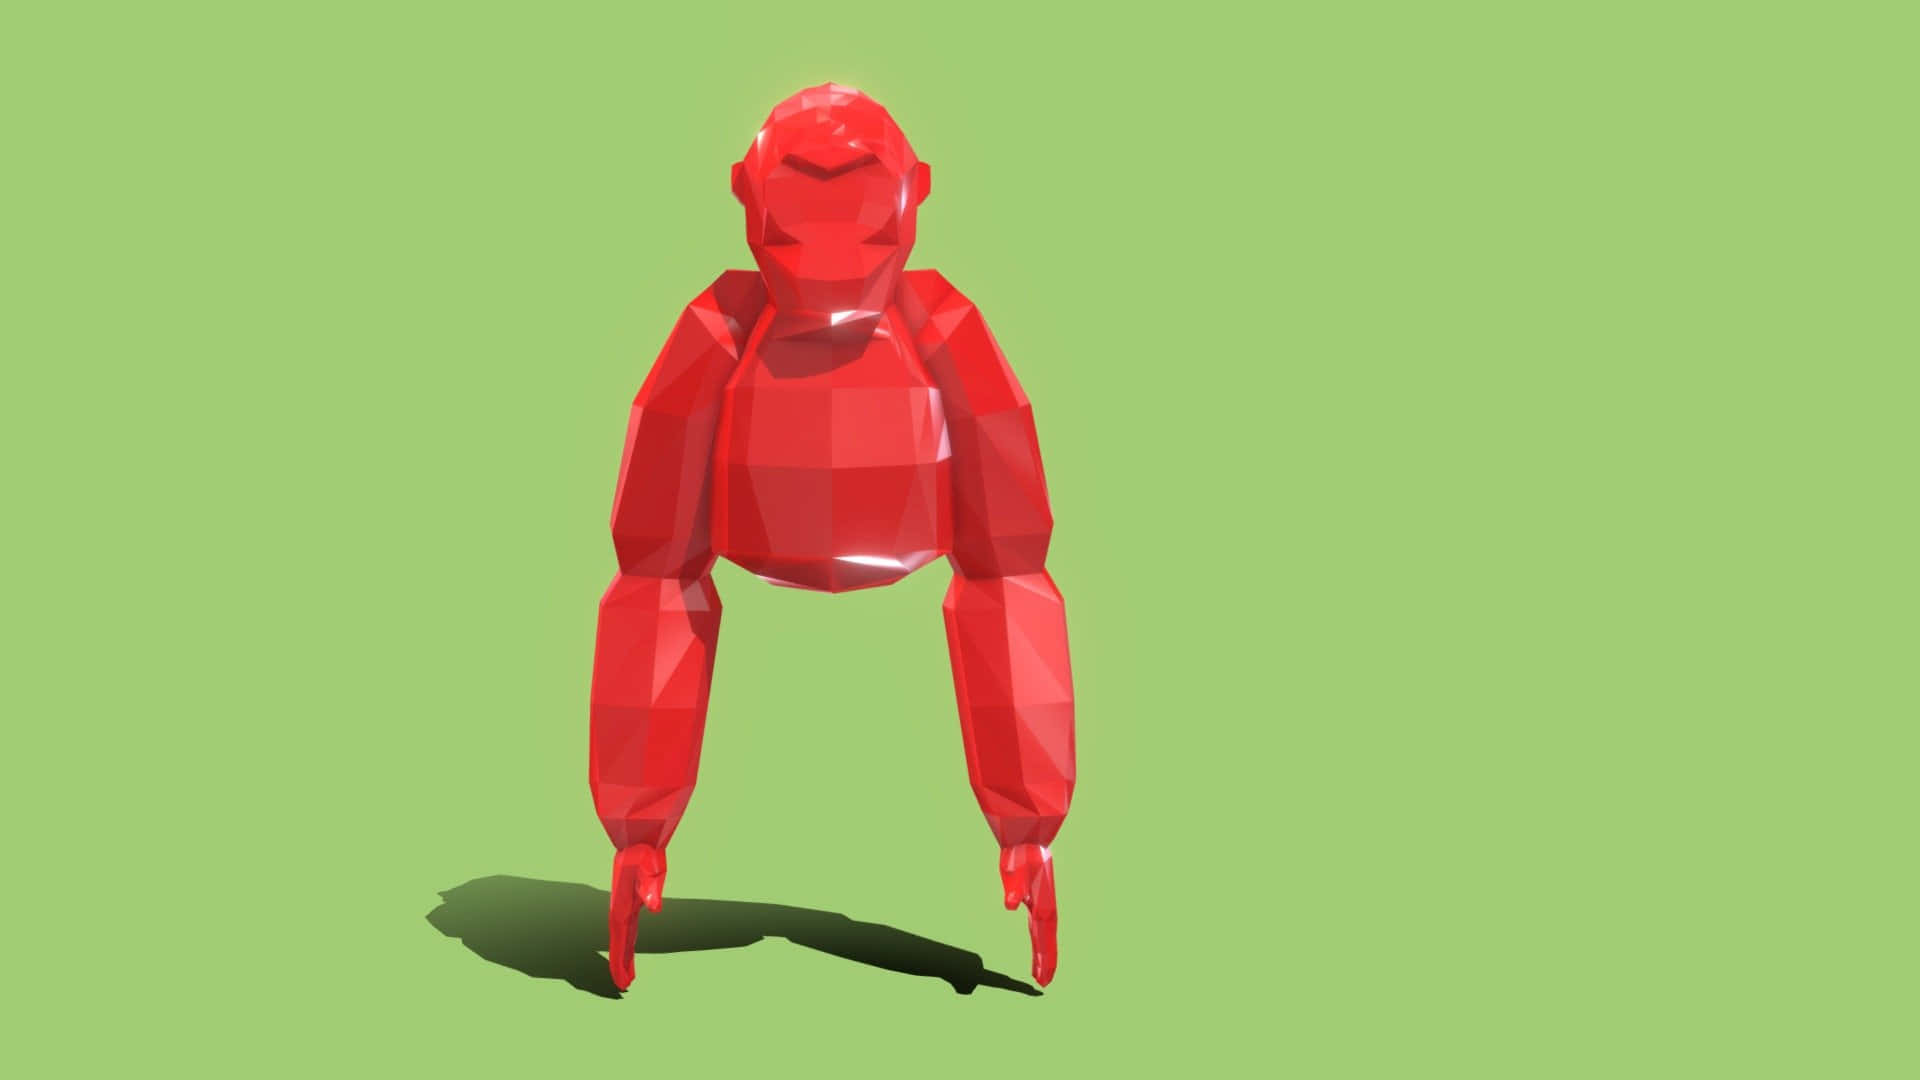 Unrobot Poligonale Rosso In Piedi Su Uno Sfondo Verde Sfondo